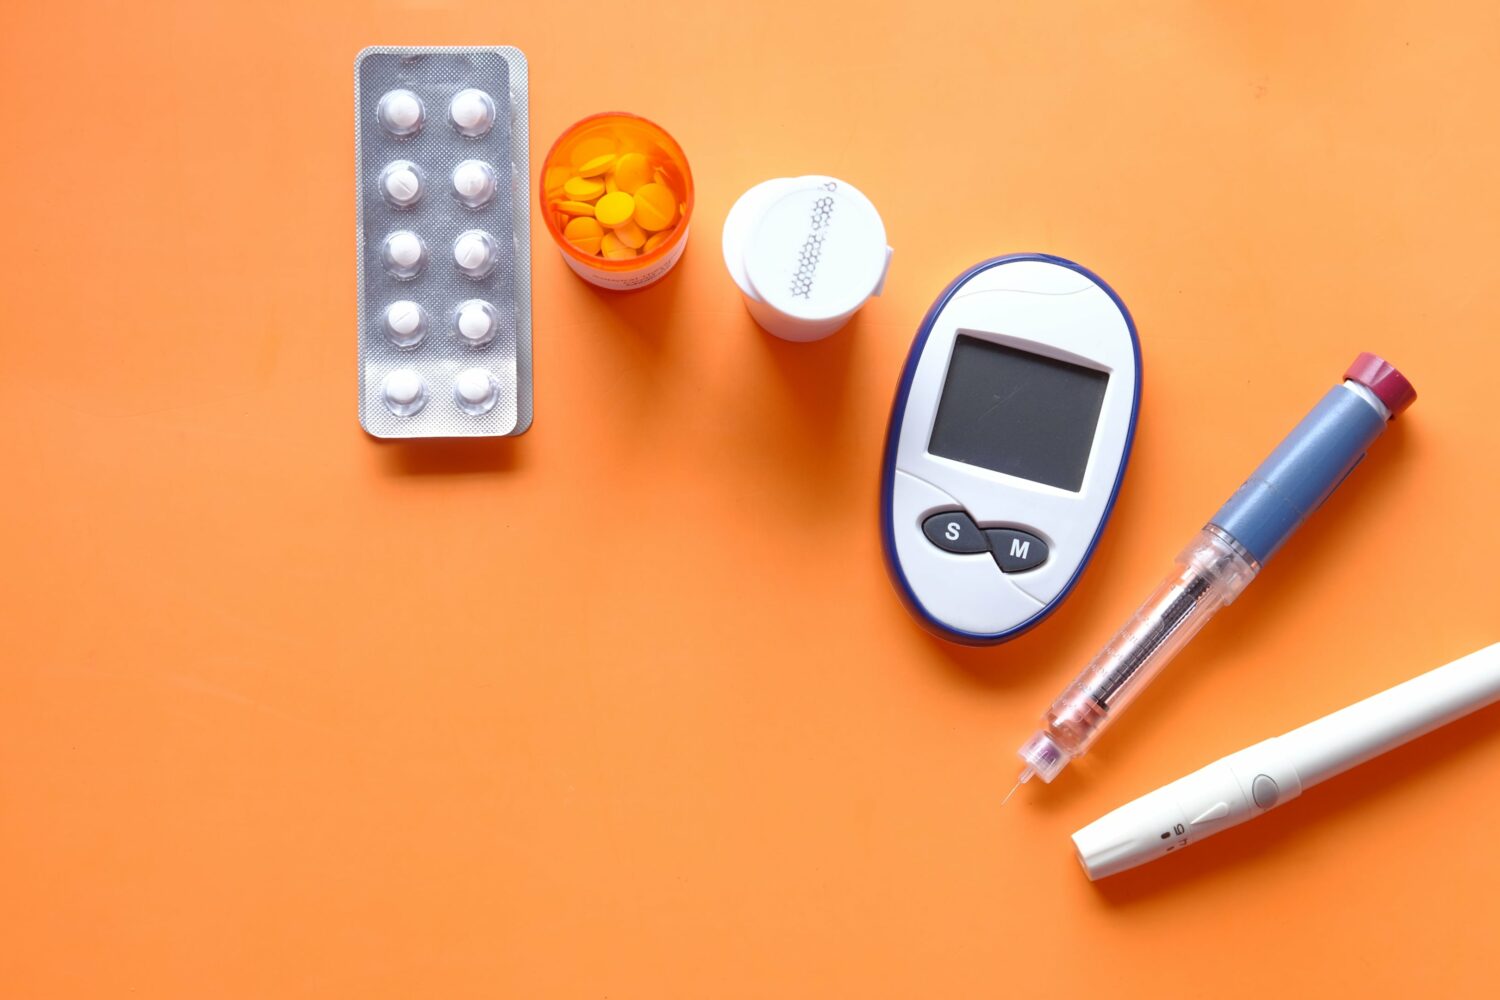 Insulin pen, diabetic measurement tools and pills set against a gradient orange backdrop